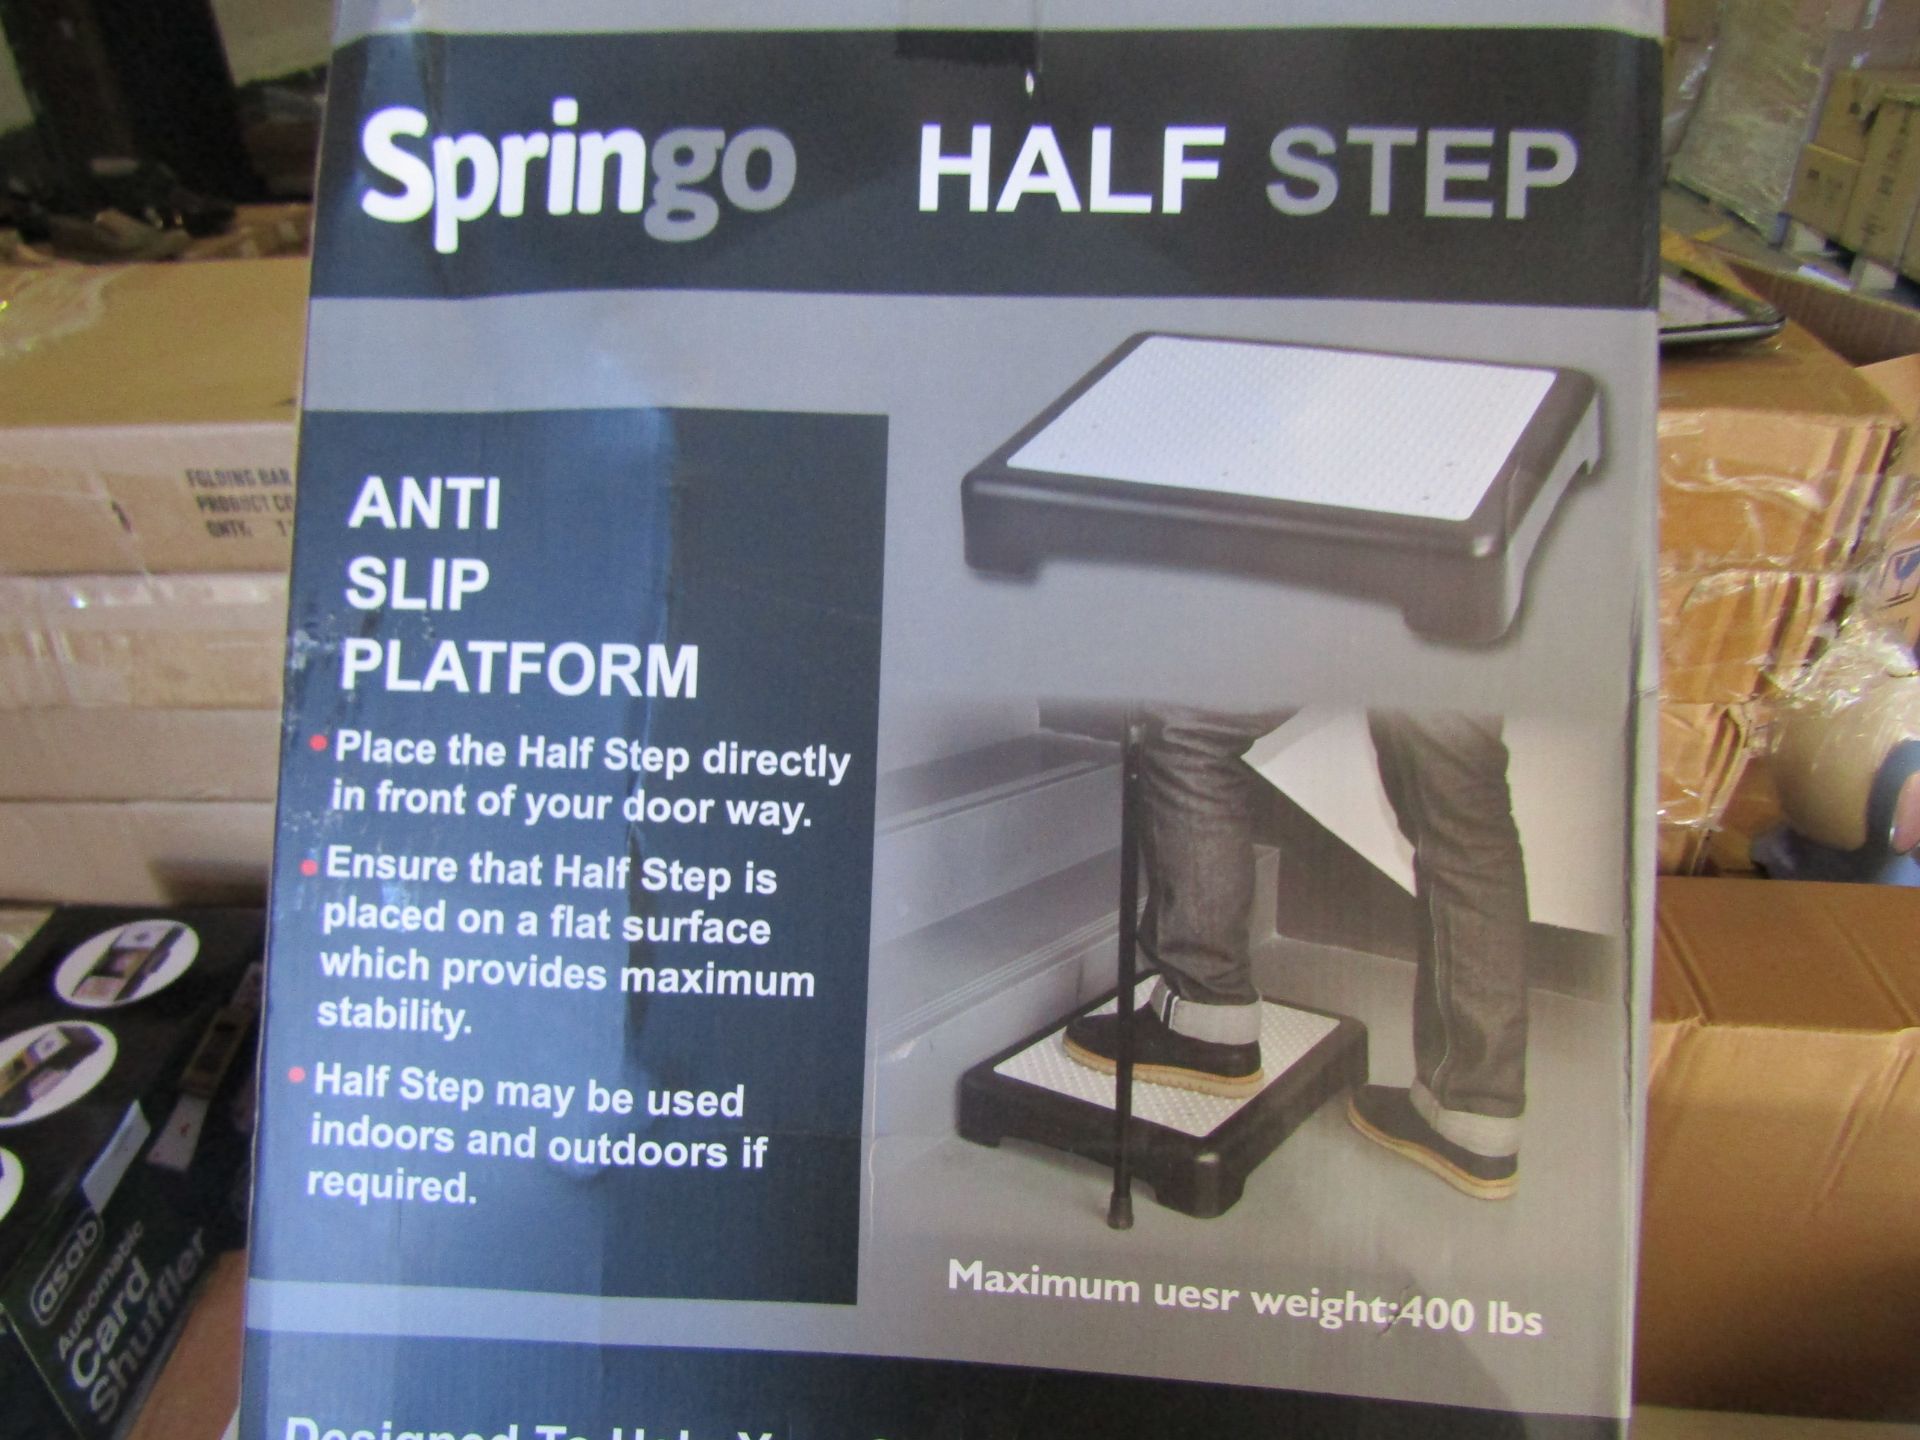 2x Springo Anti-Slip Platform Half Step - Both Unchecked & Boxed.